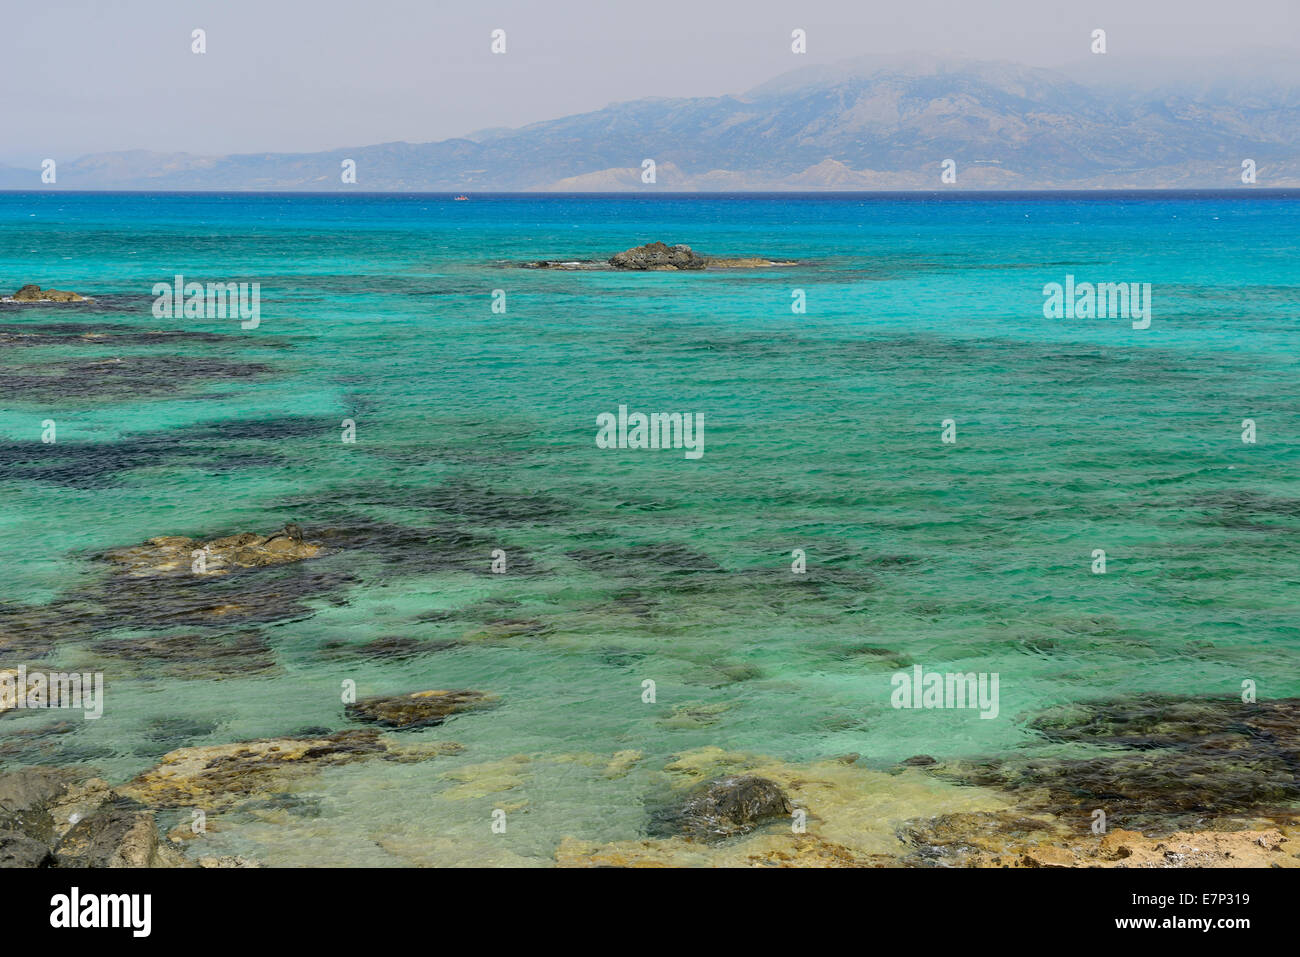 Europe, Greece, Greek, Crete, Mediterranean, island, Chrissi Island, Ierapetra, Coast, sea, water Stock Photo